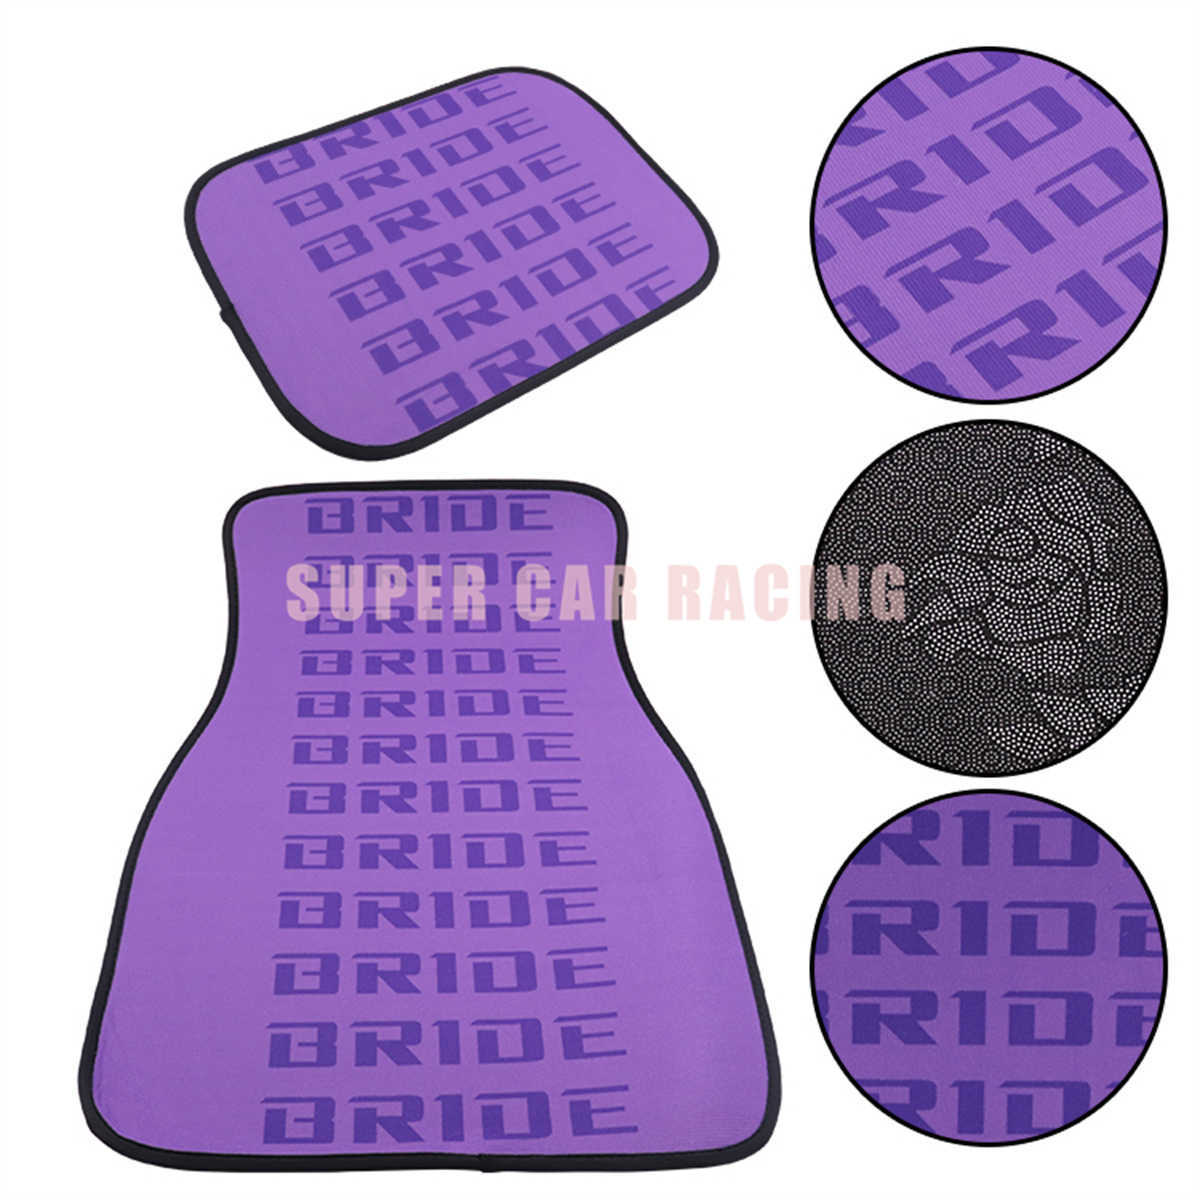 Racing Sport Car BRIDE Fabric Floor Mats Protector JDM Style Universal Waterproof Non-Slip Auto Interior Carpets 0929